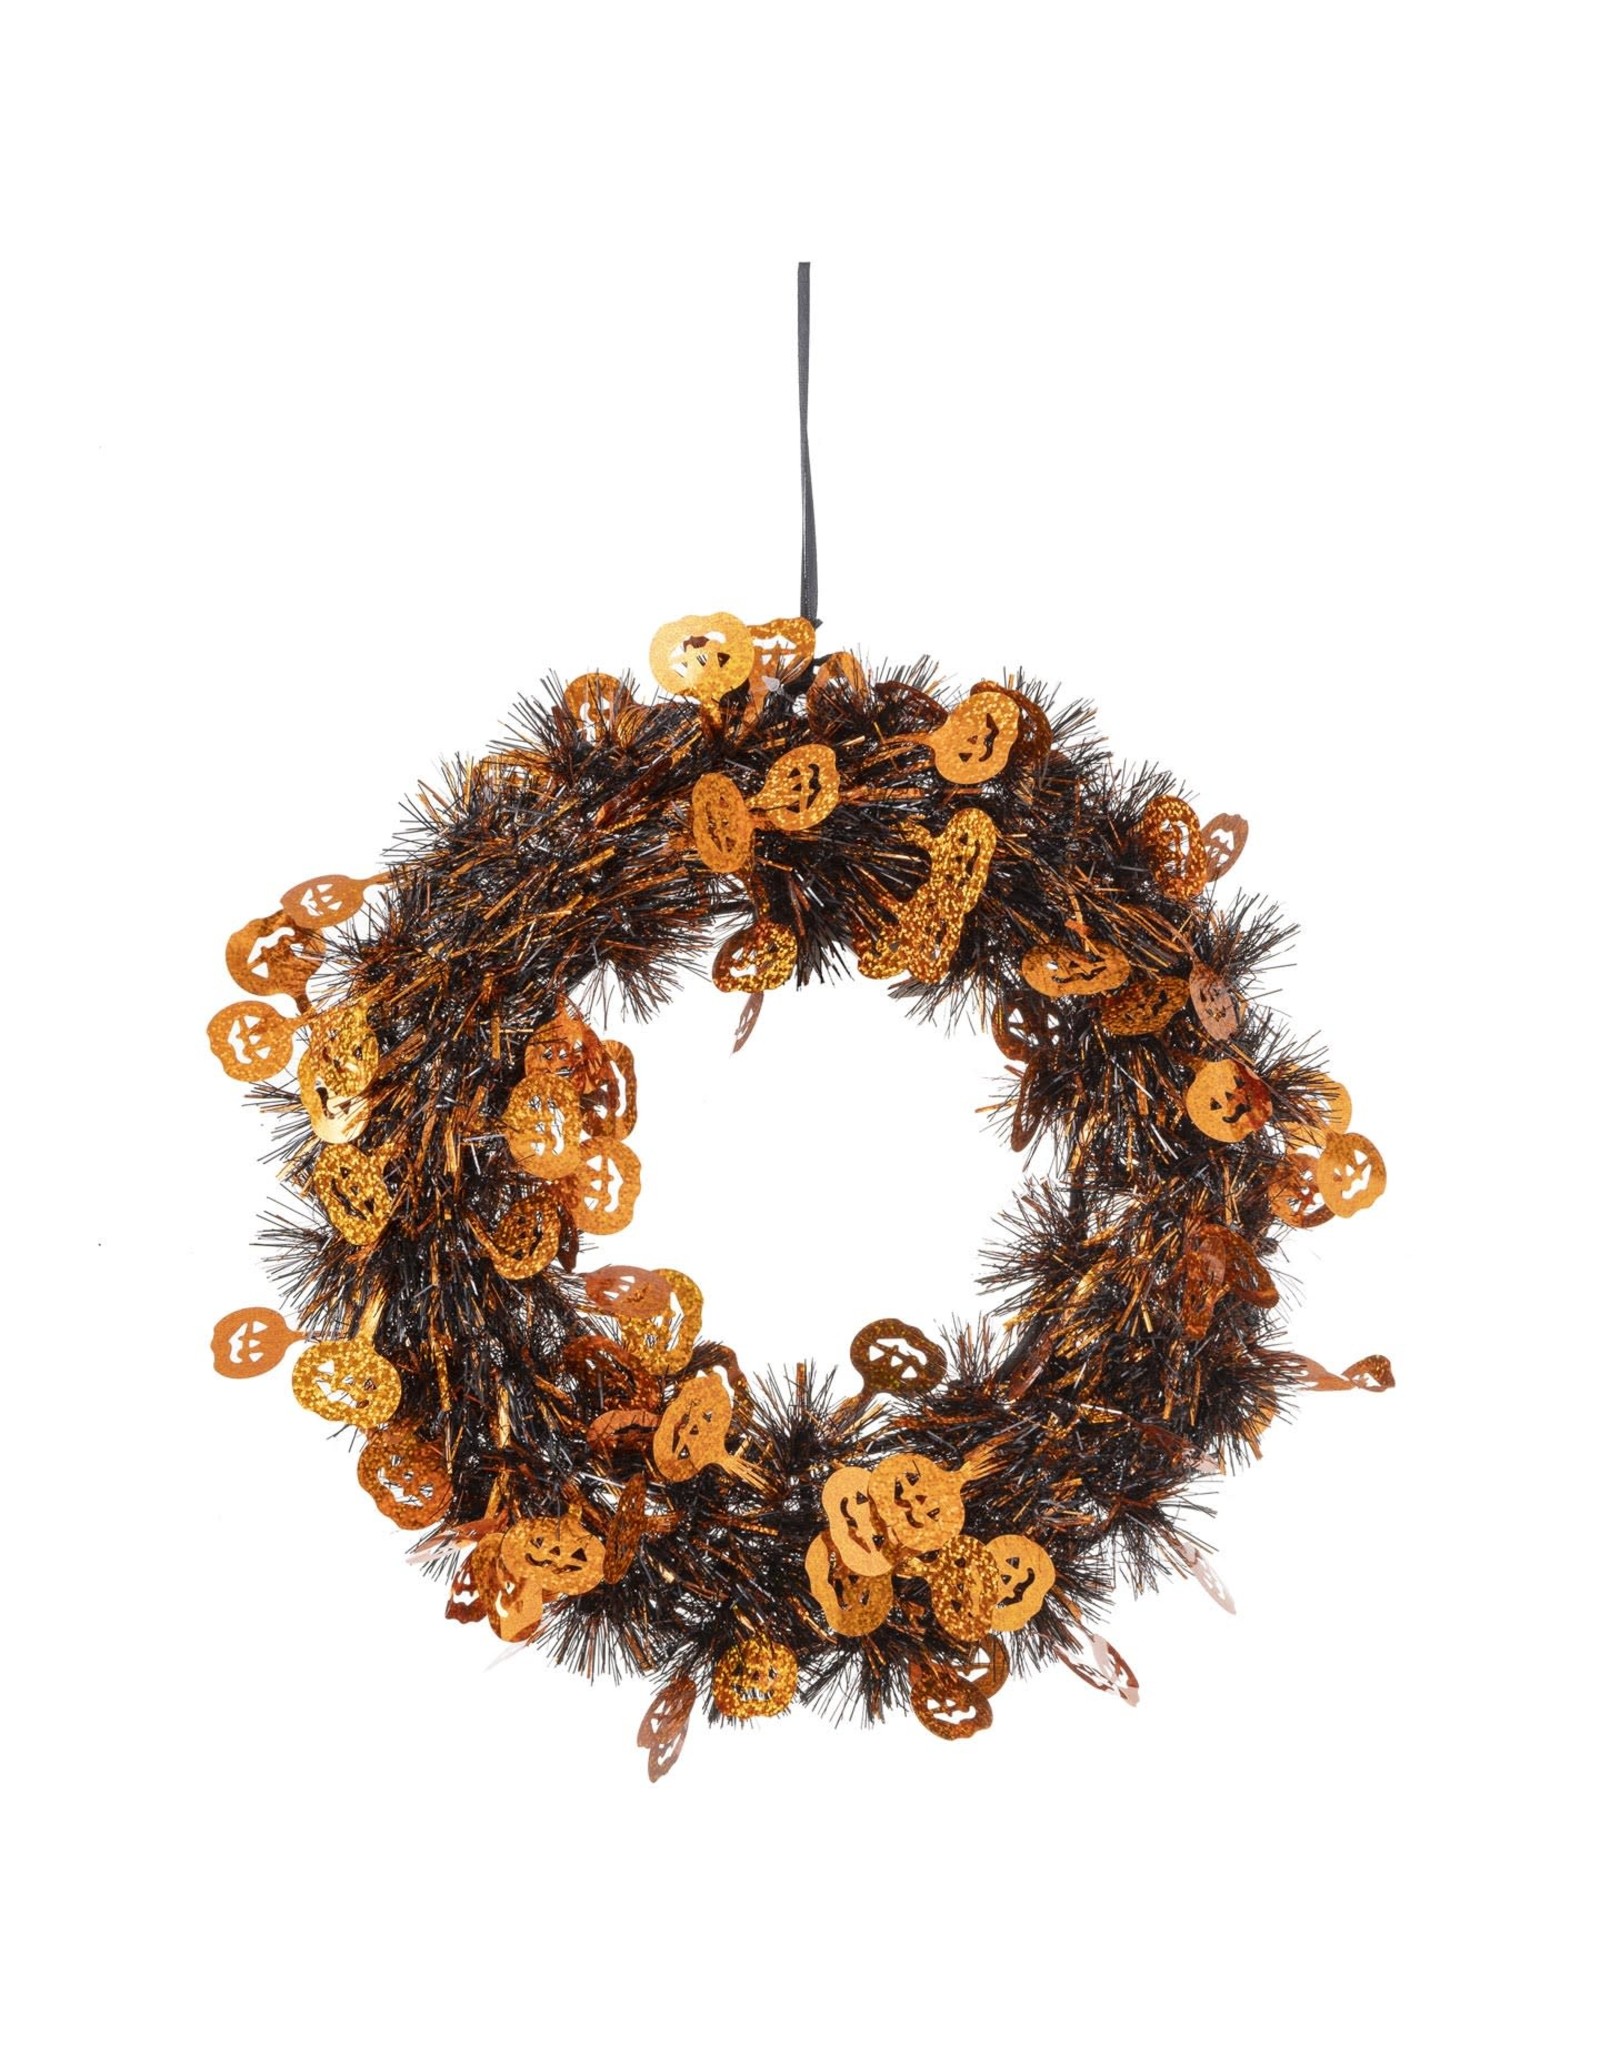 Darice Halloween Tinsel Wreath With Pumpkins 11 inch